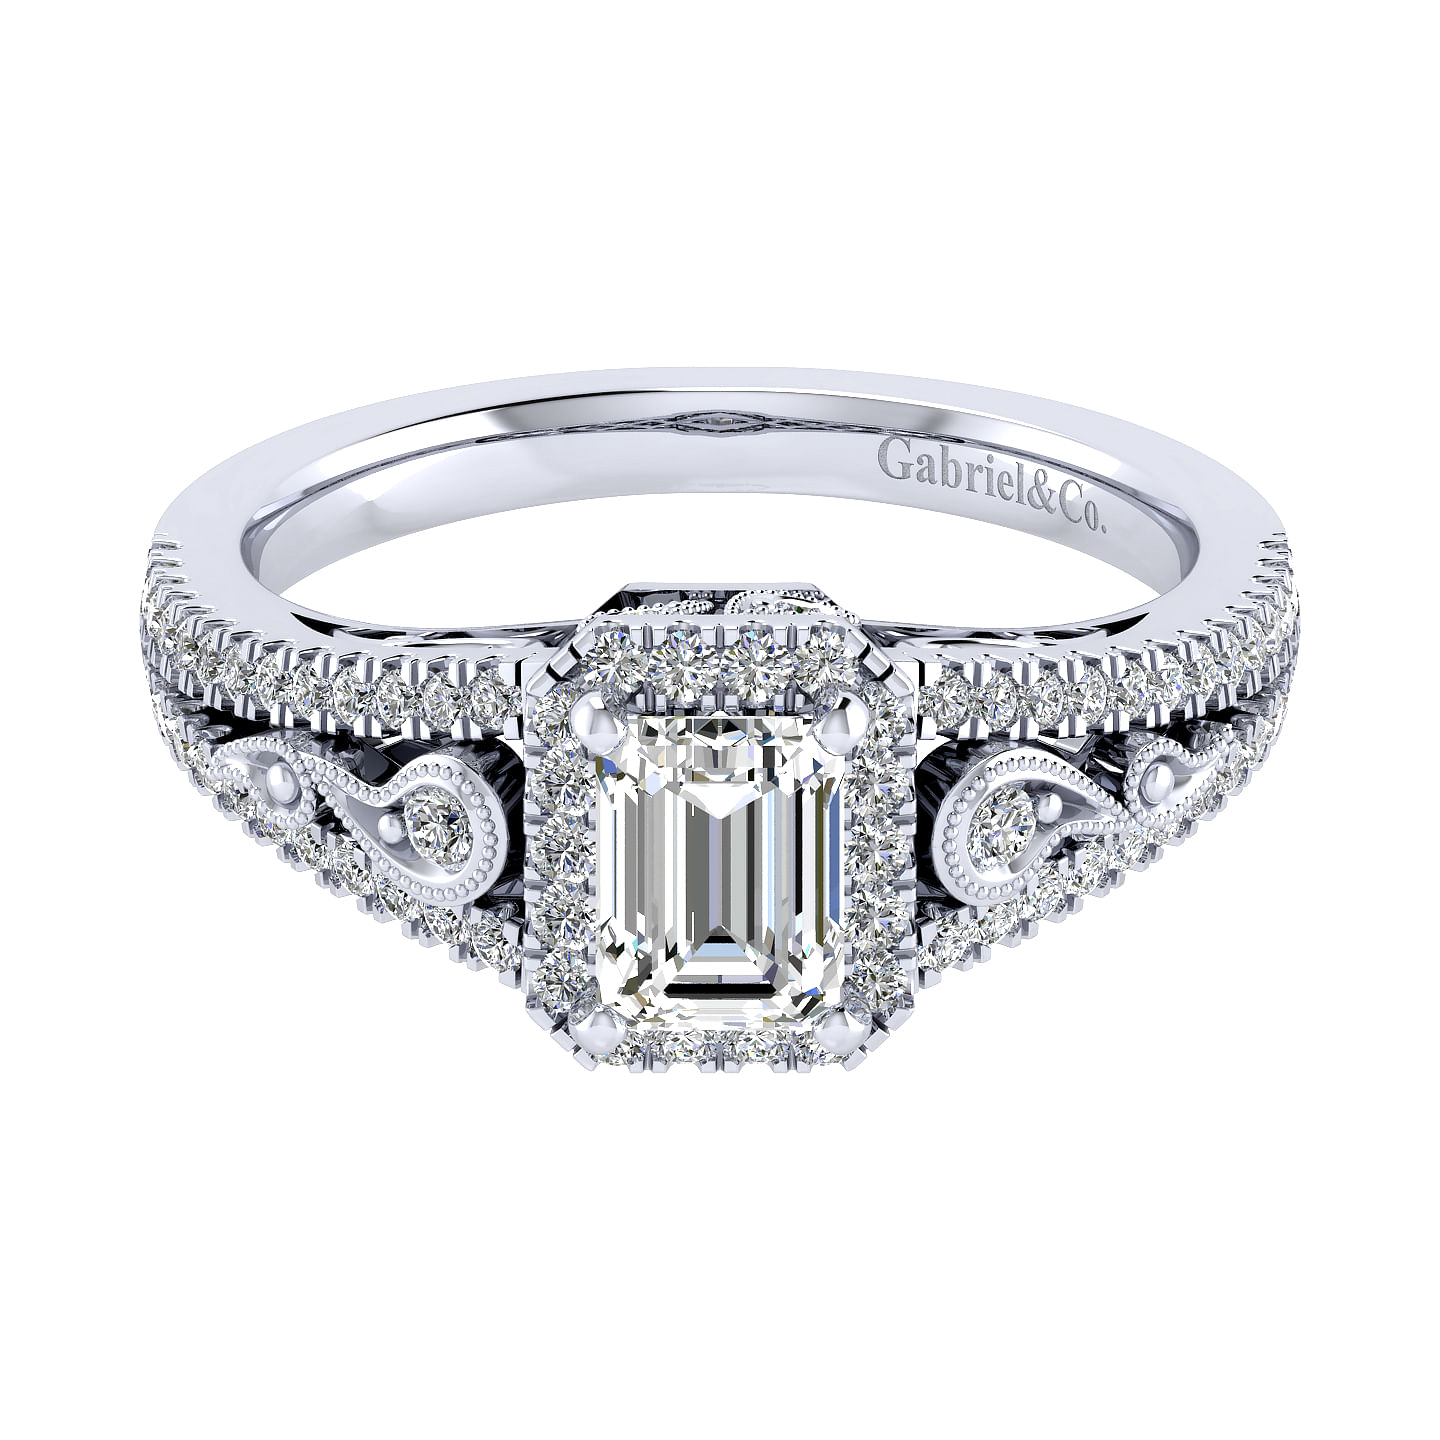 Marlena - Vintage Inspired 14K White Gold Halo Emerald Cut Diamond Engagement Ring